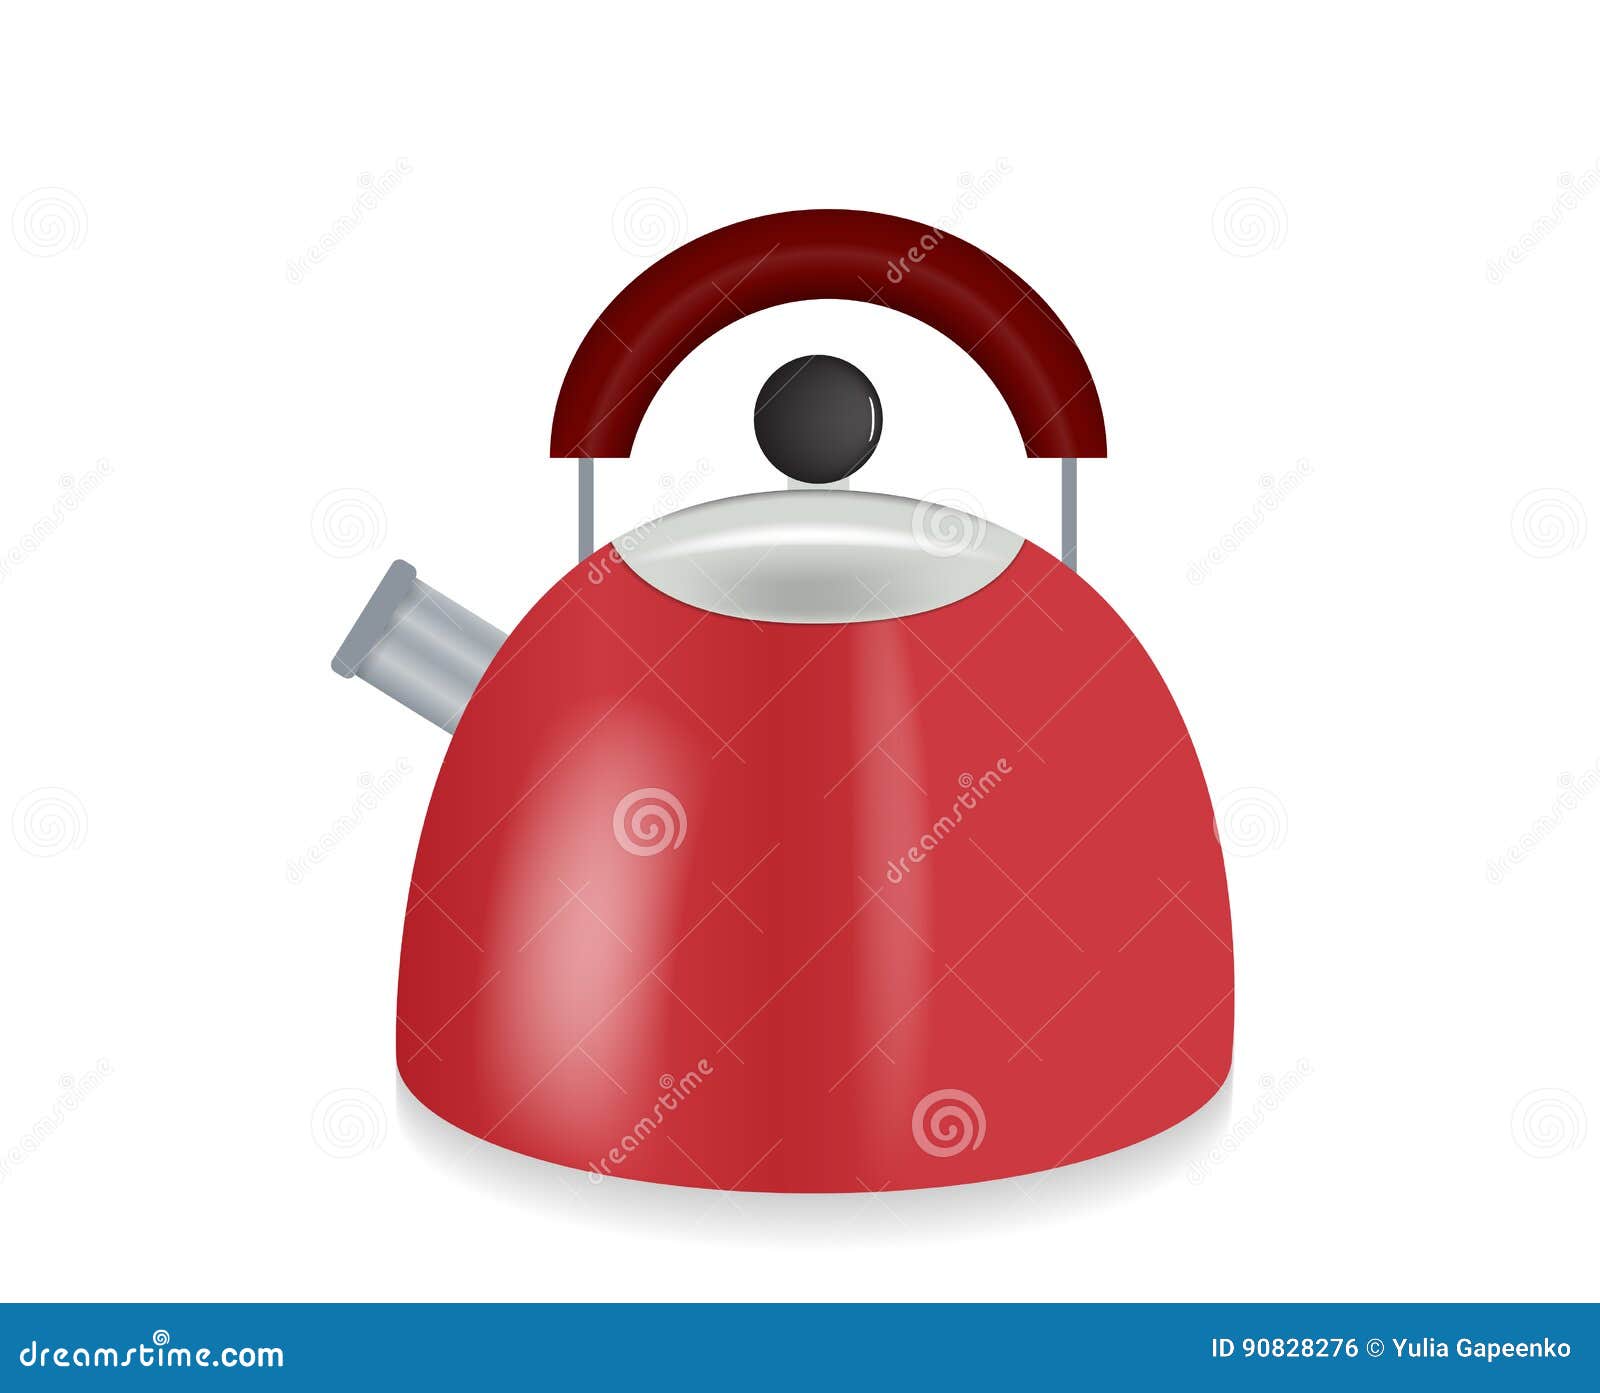 kitchen appliances red electric kettle vector illustration eps 90828276